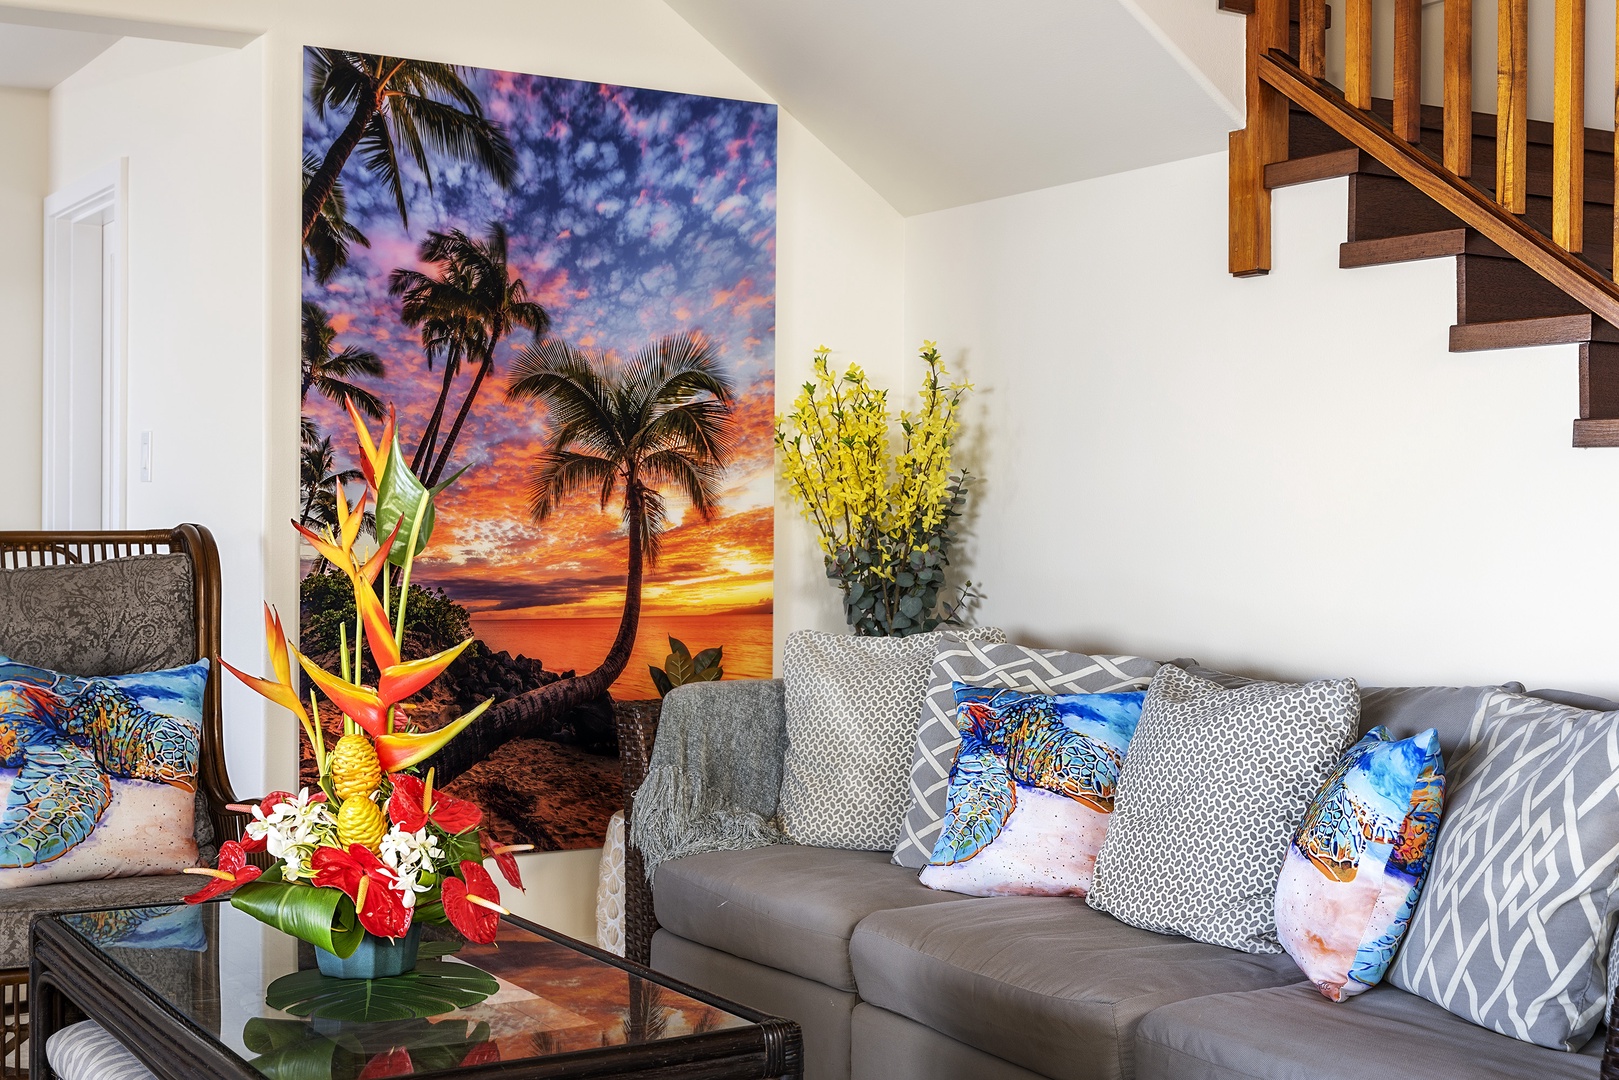 Kailua Kona Vacation Rentals, Hale Pua - Breathtaking art work throughout